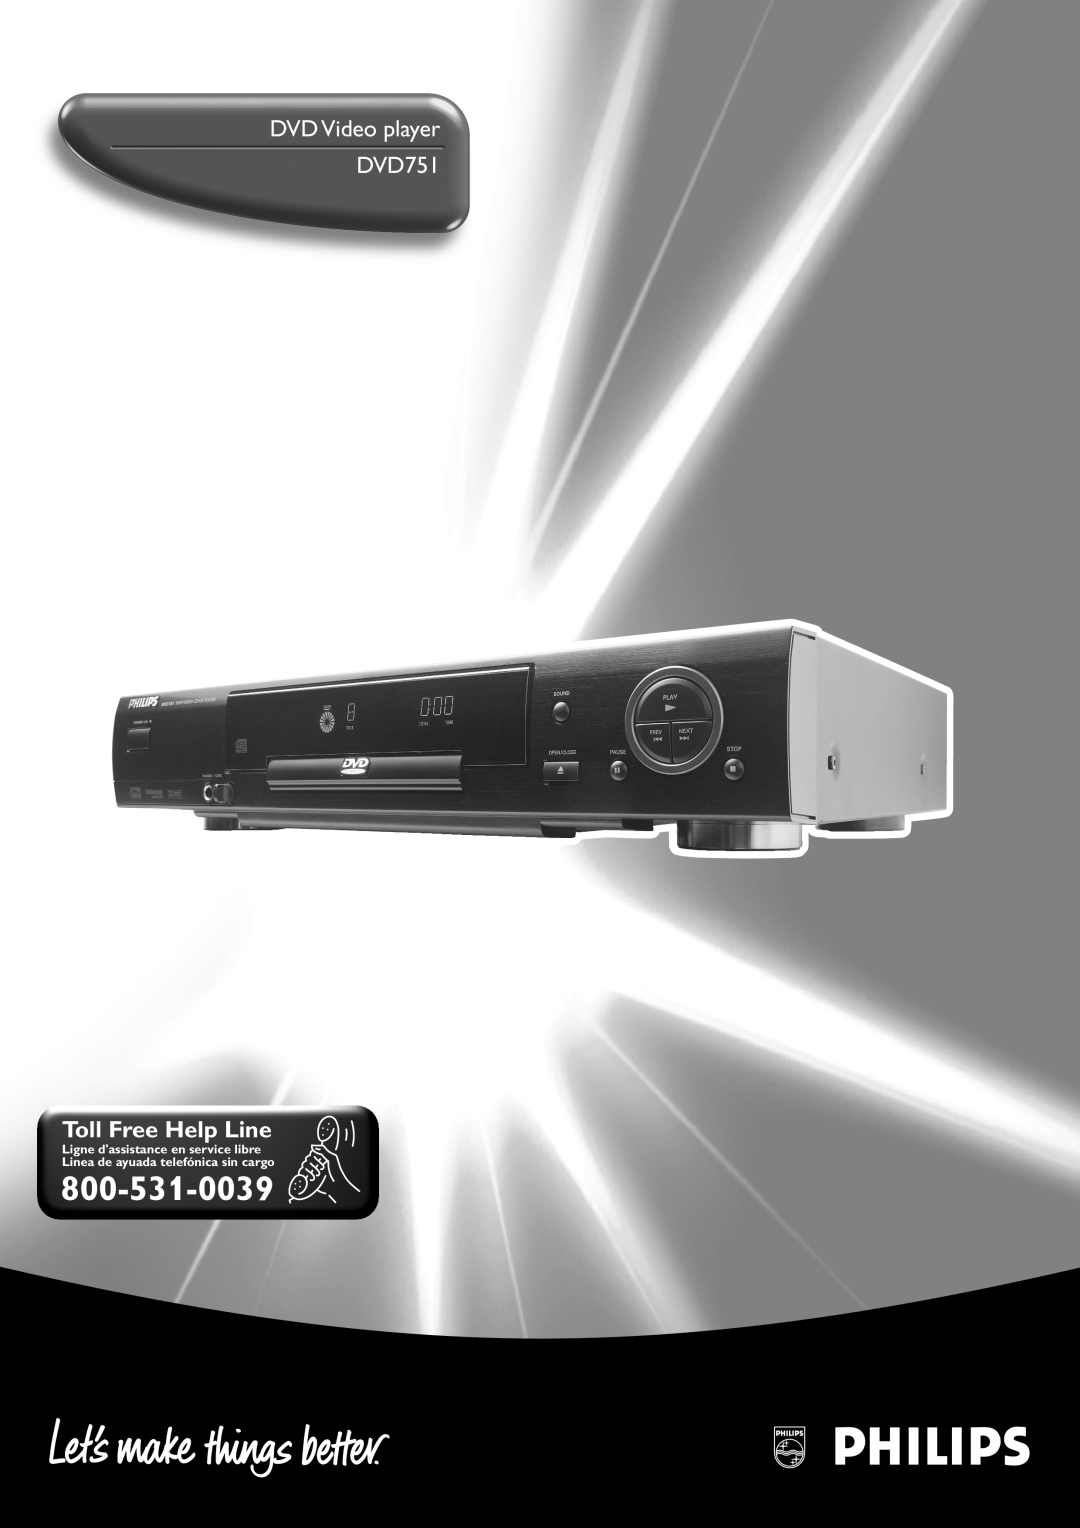 Philips manual DVD Video player DVD751, Toll Free Help Line, Ligne dassistance en service libre 